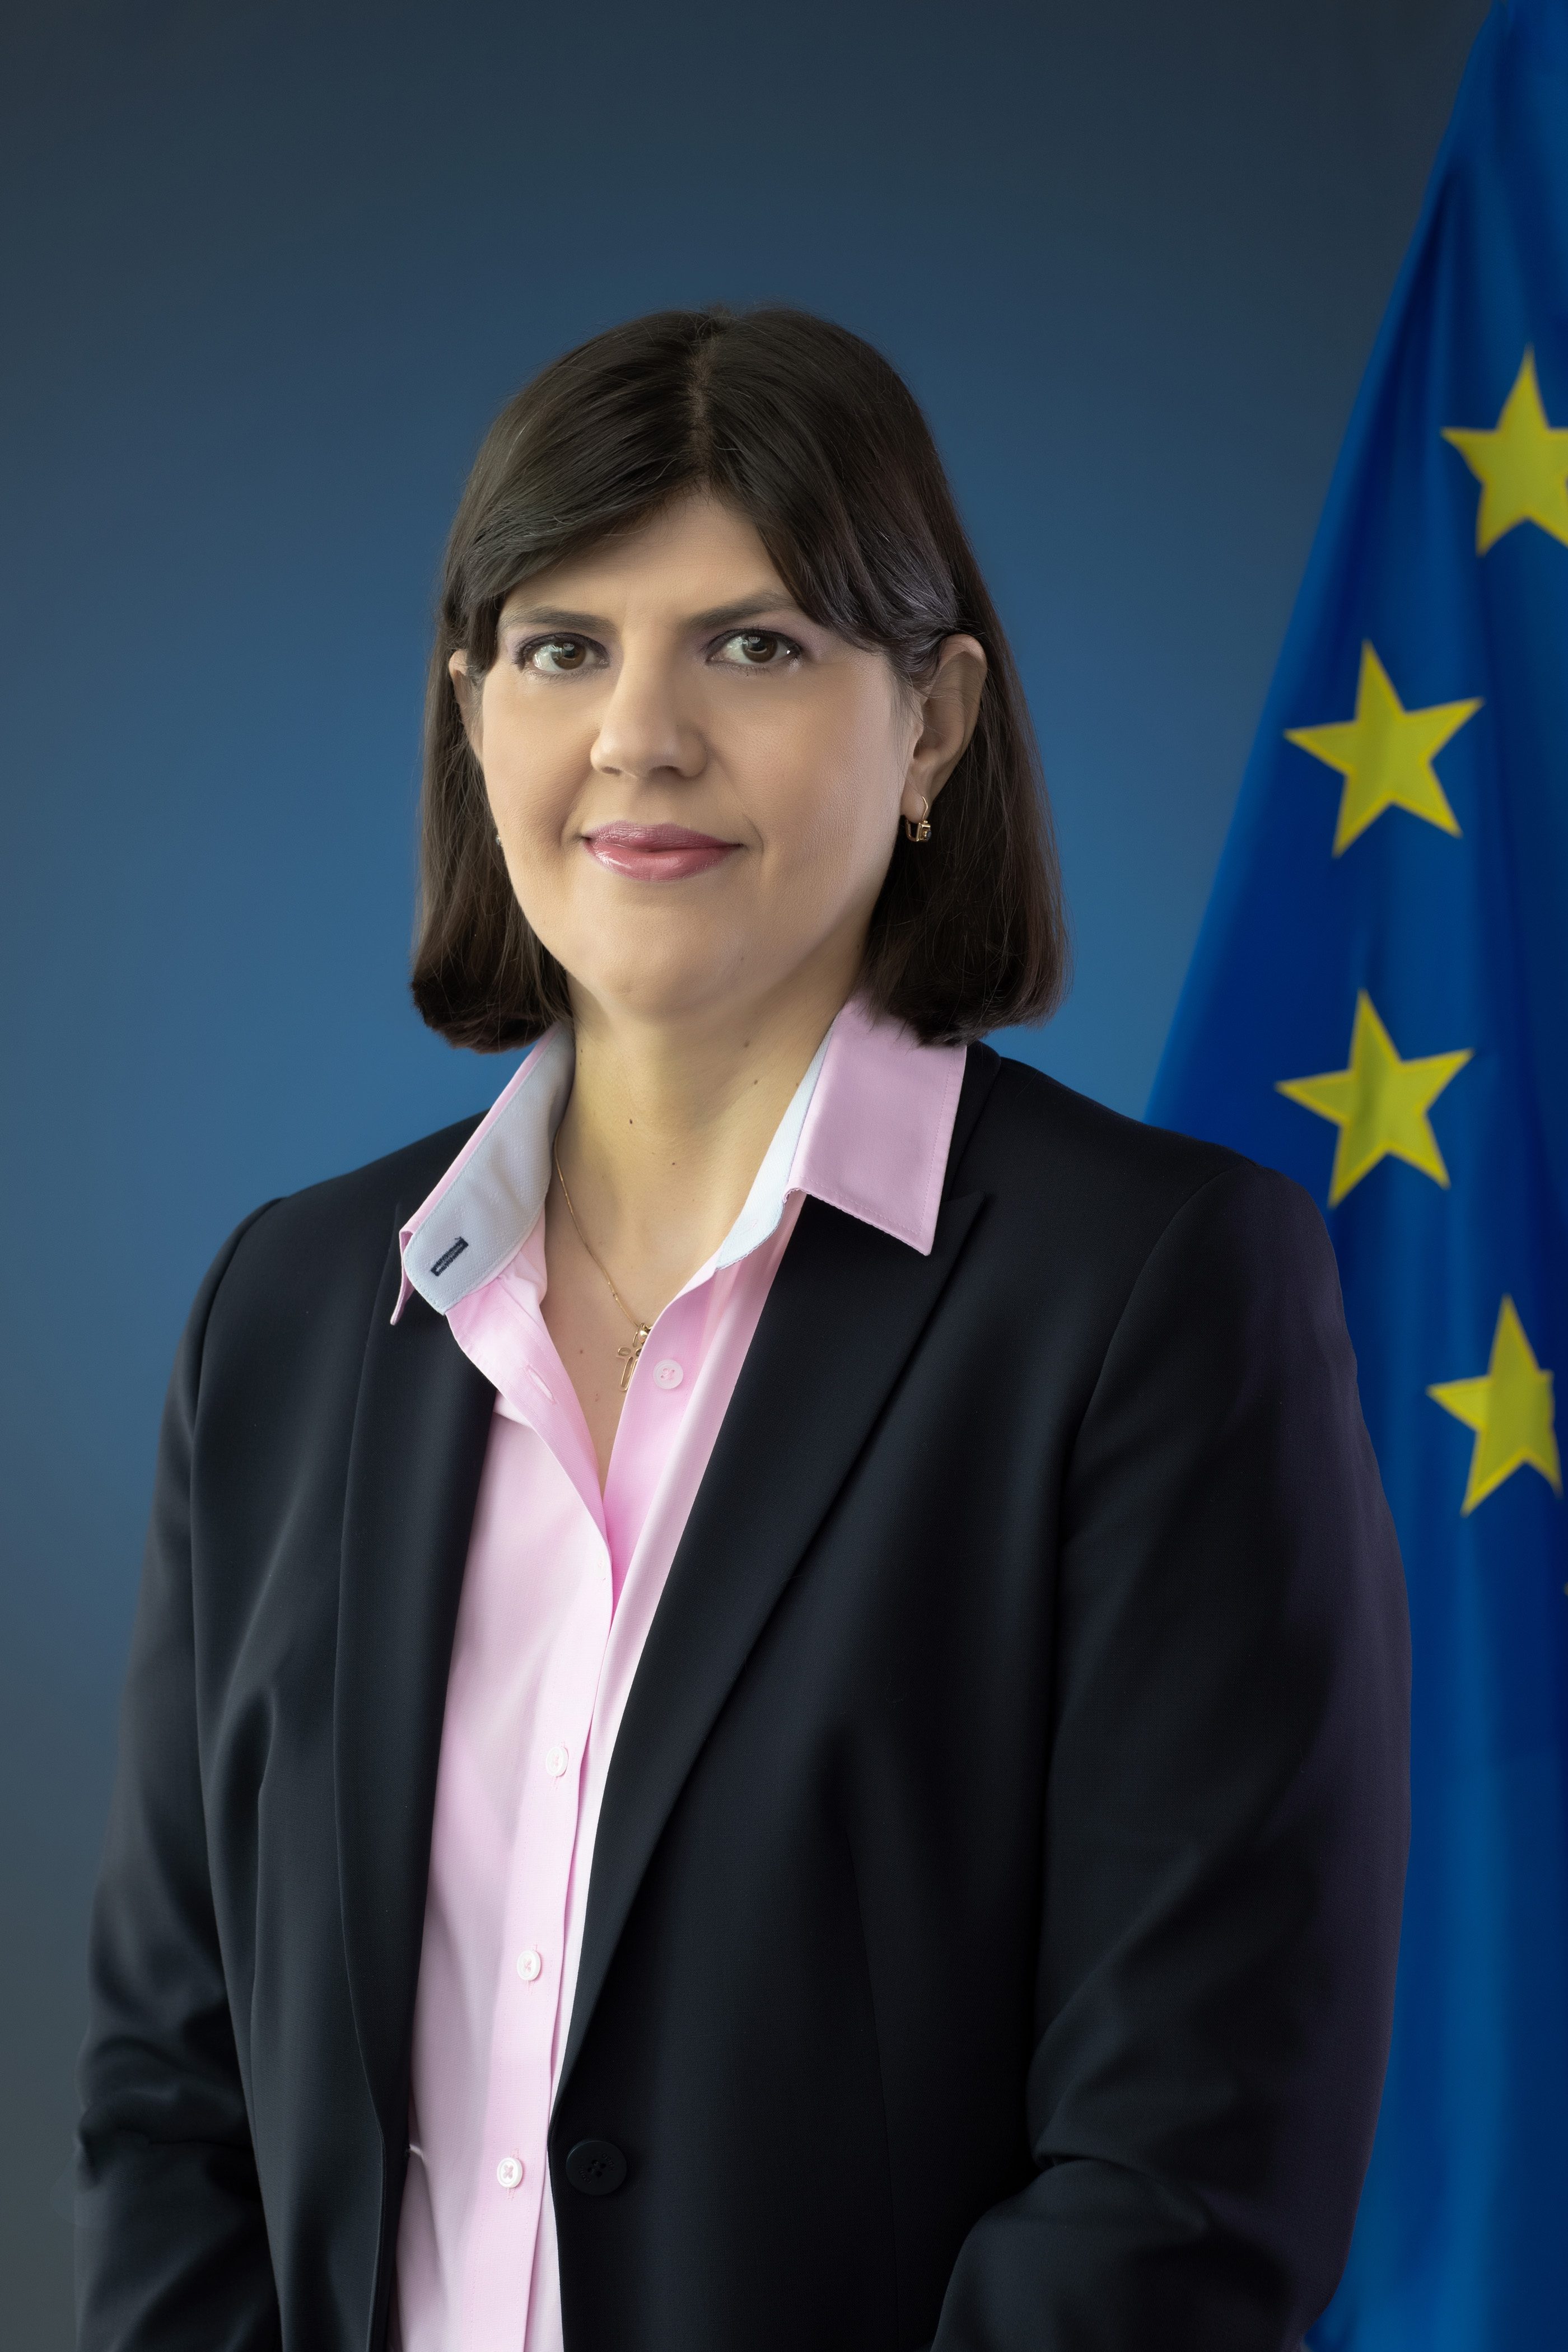 Photograph of European Chief Prosecutor Laura Kovesi